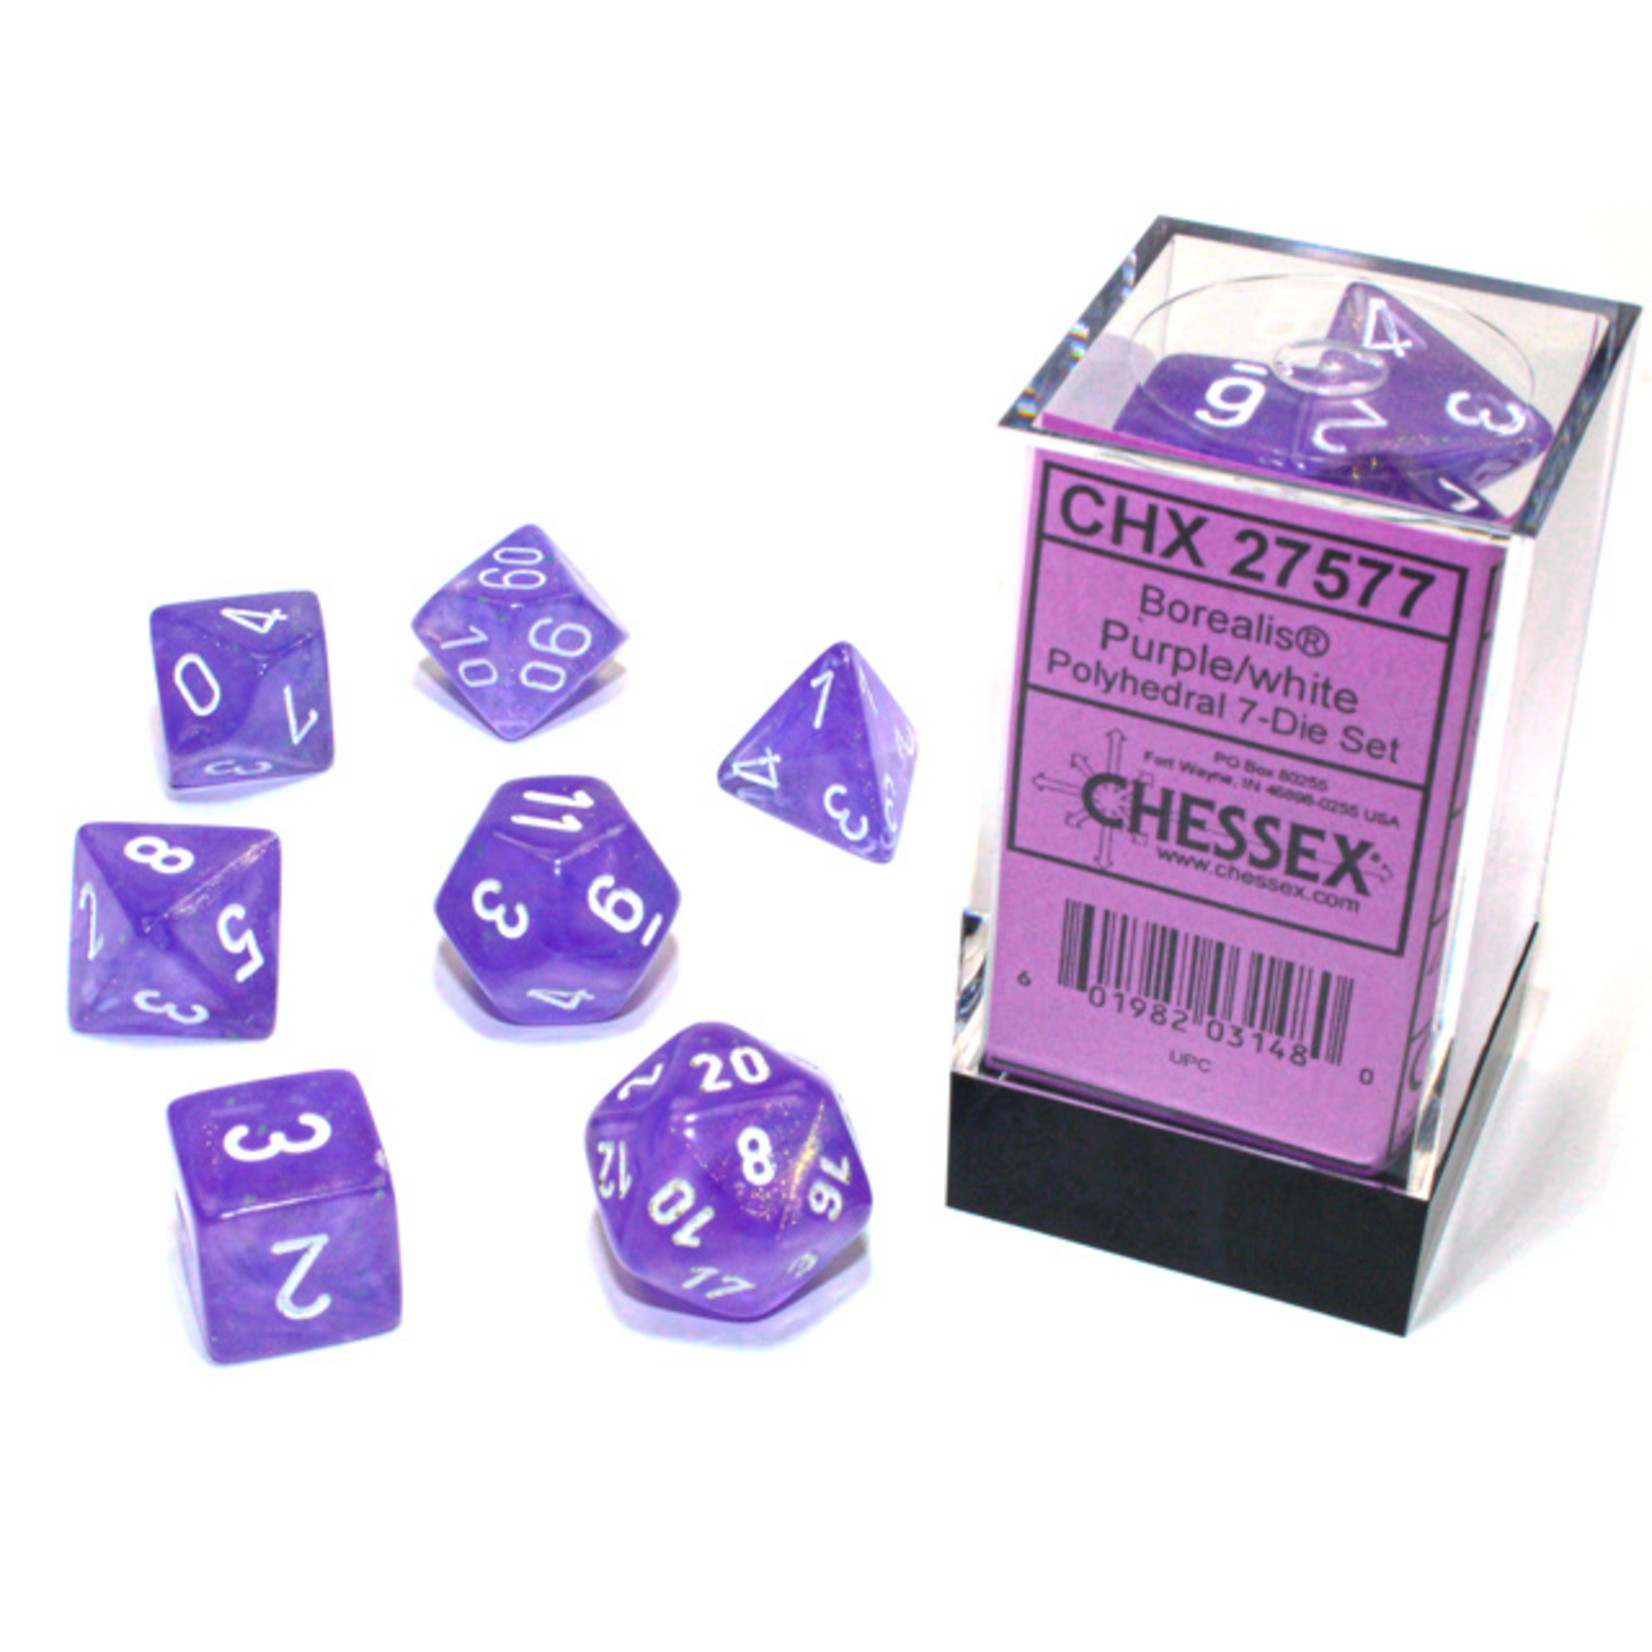 Chessex 27577 Borealis Luminary Purple with White 7-Set